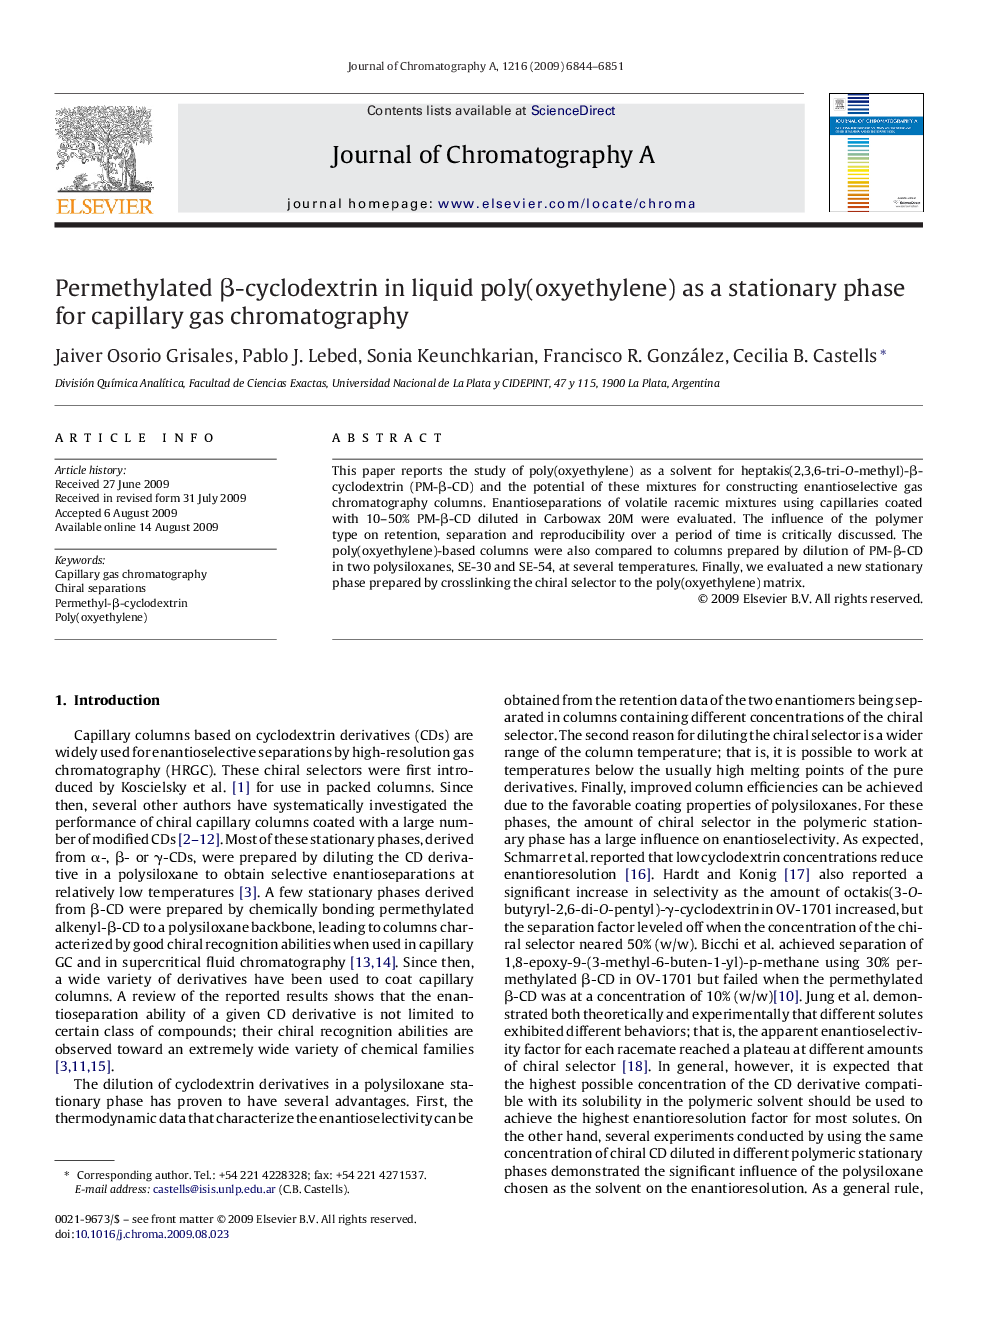 Permethylated β-cyclodextrin in liquid poly(oxyethylene) as a stationary phase for capillary gas chromatography